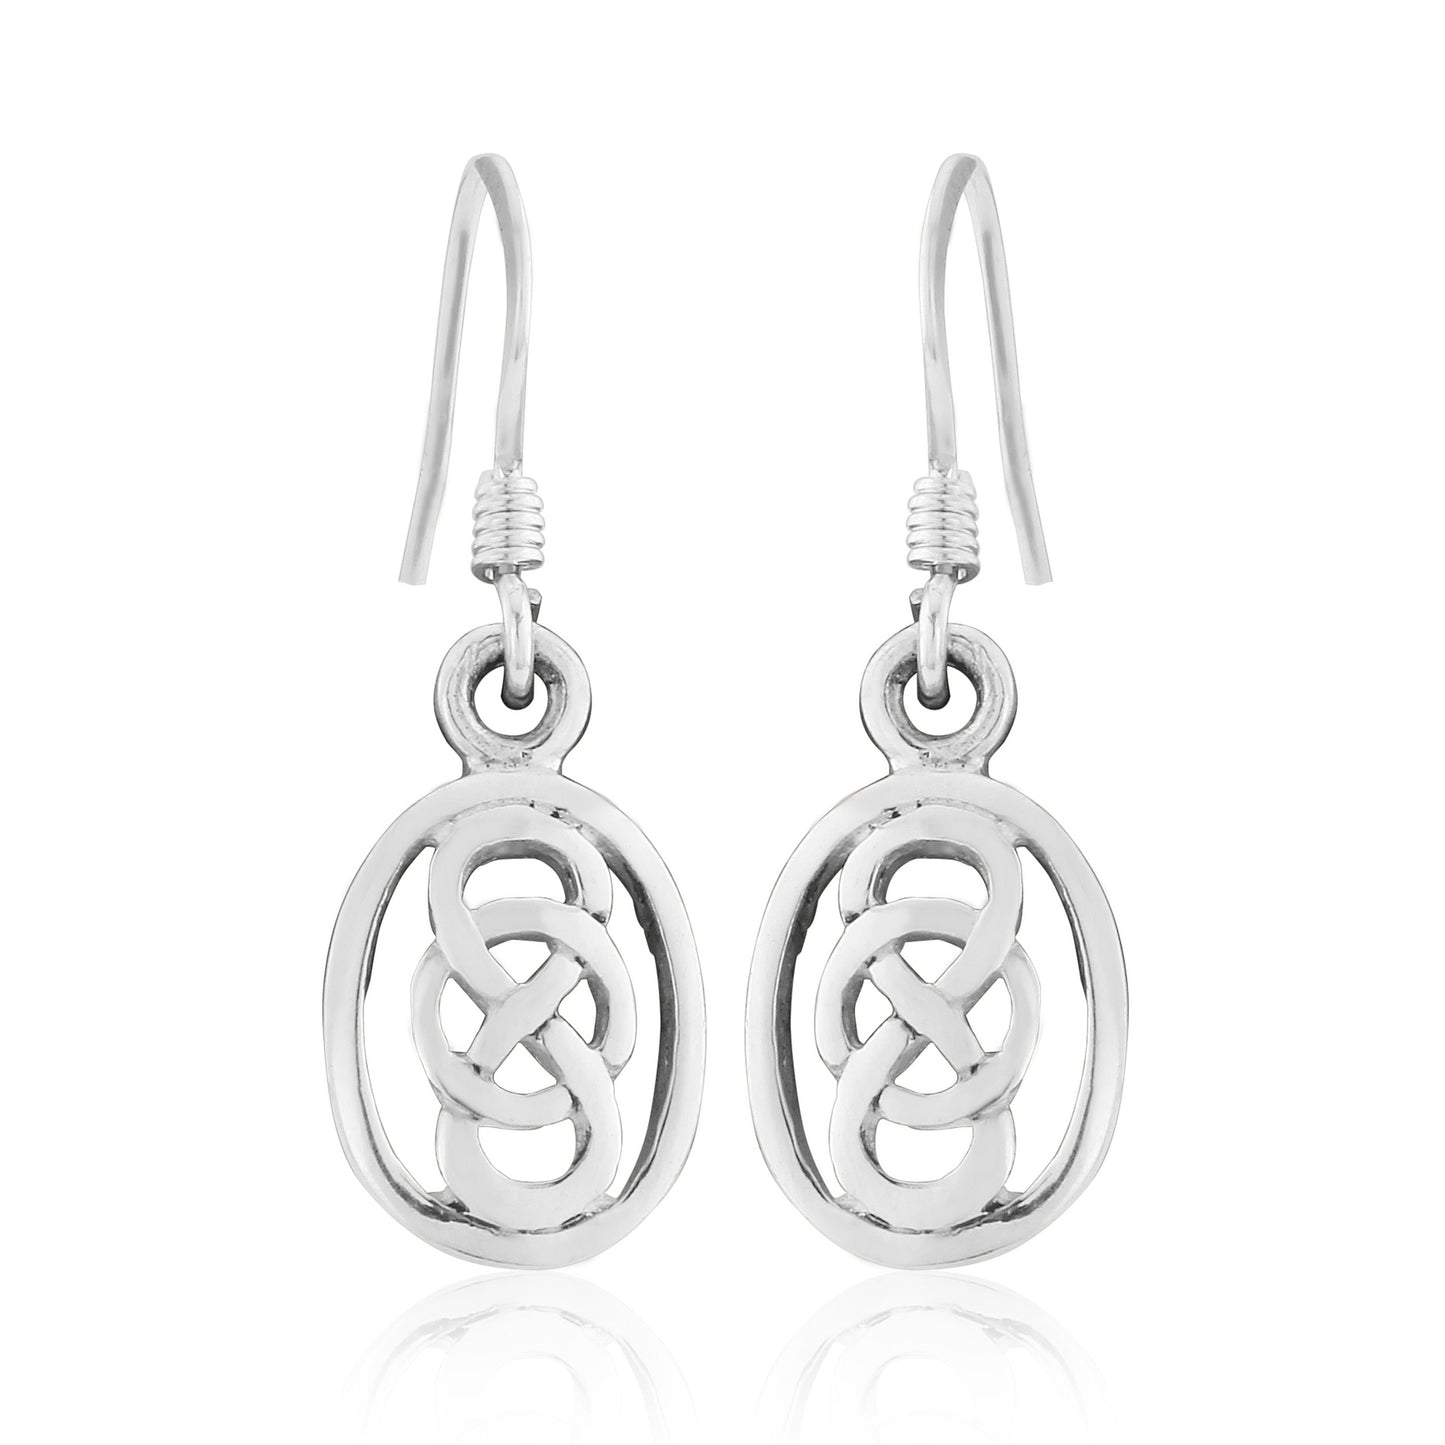 Celtic Knot Sterling Silver Earrings with Hook Backs